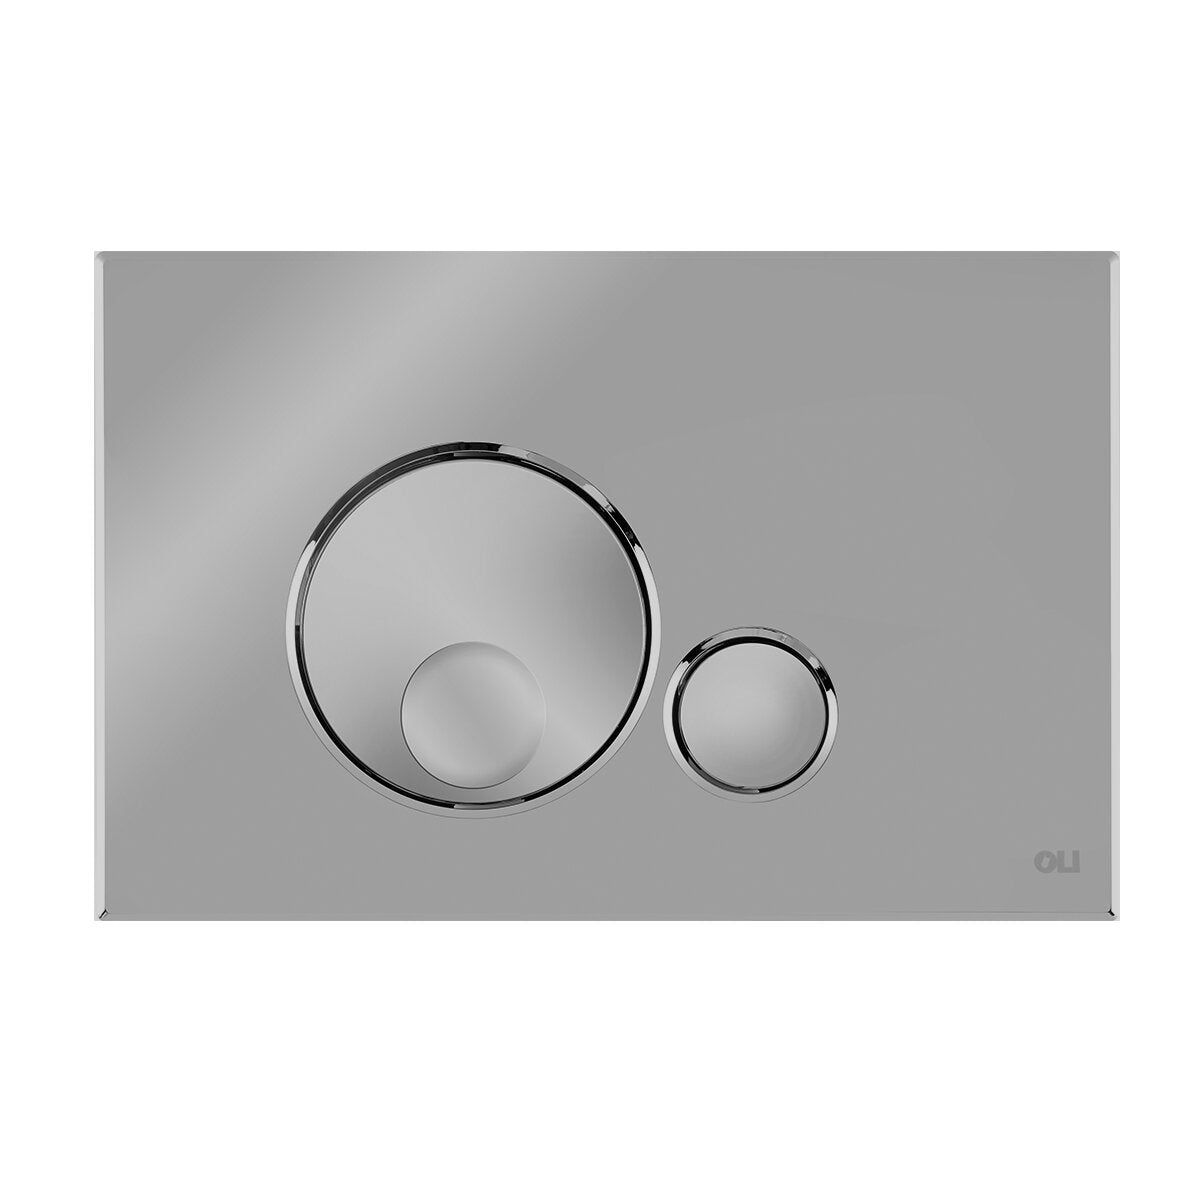 OLI GLOBE double button plate in satin chrome